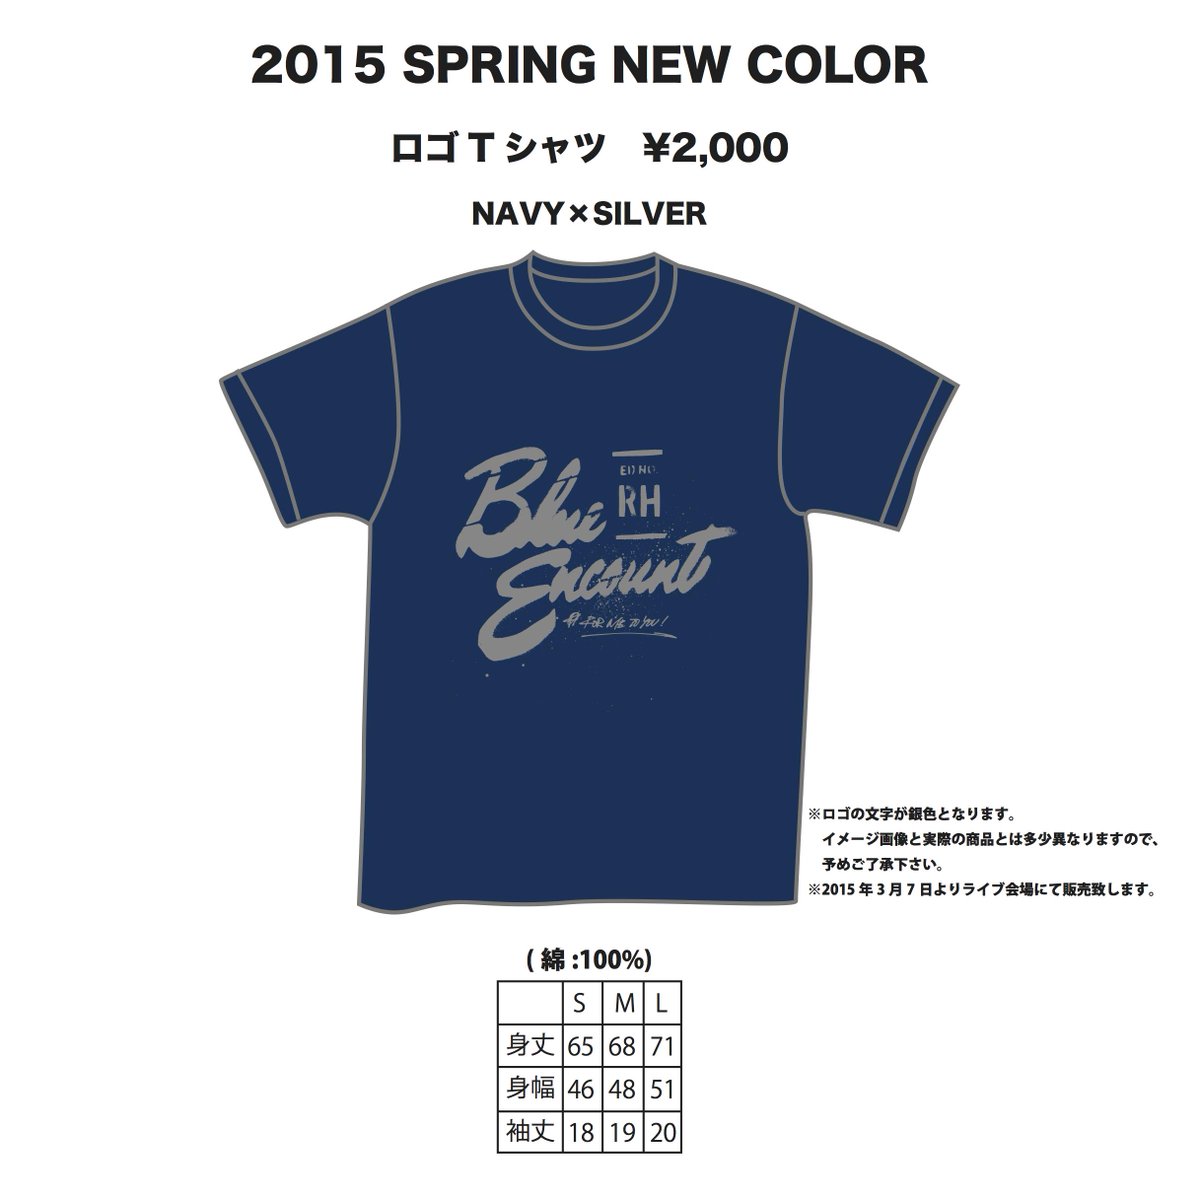 ট ইট র Blue Encount Blue Encountグッズ 15 Spring New Color 登場 ロゴtシャツの販売は3月7日開催の Http T Co Dodyunr5u0 より発売 物販販売時間はblue Encount終演後となります Http T Co Mlm6yrmkxs